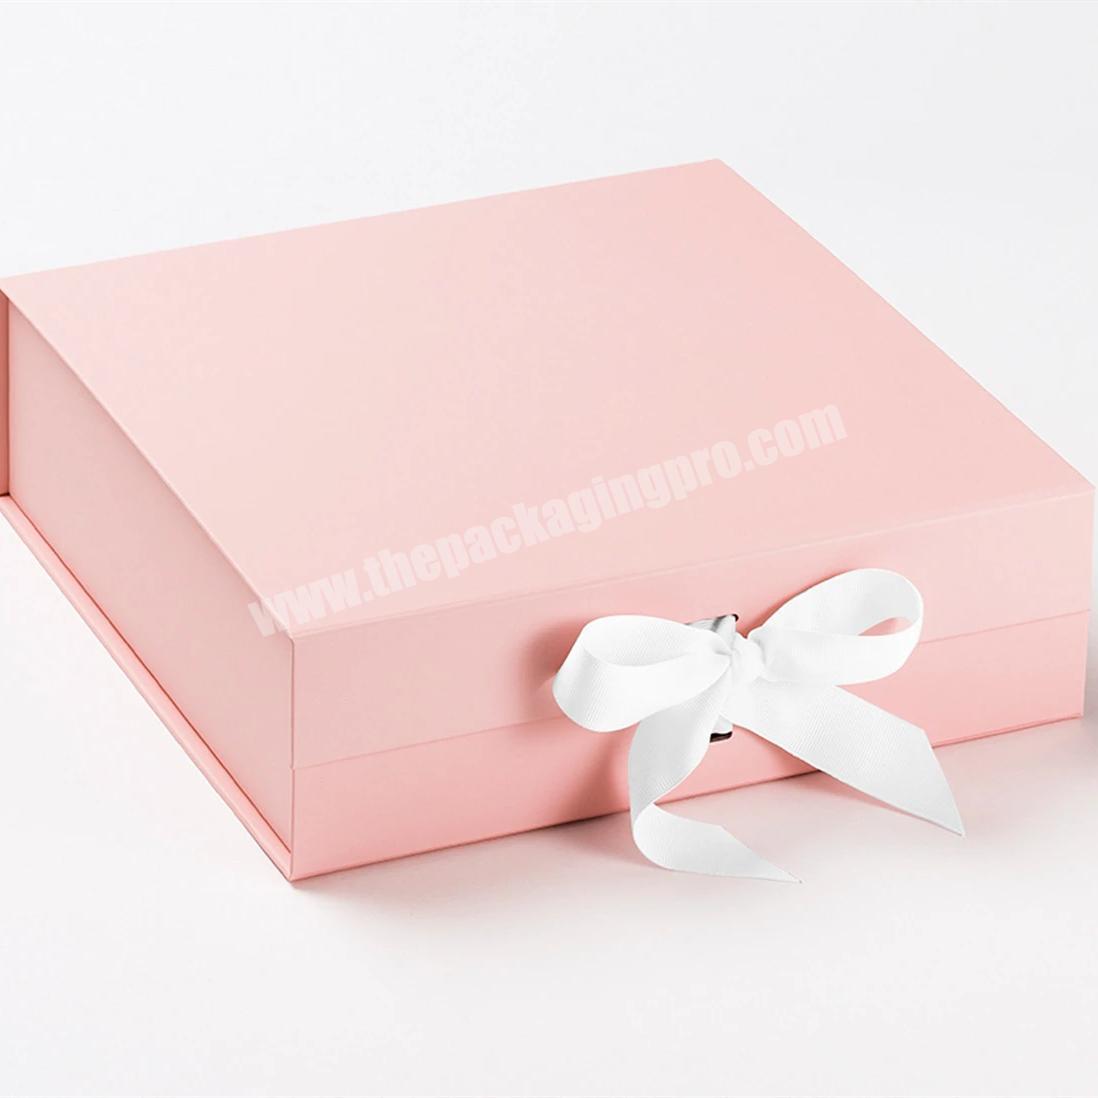 2020 Gold Black Pink Purple Rainbow Color Door Gift Box For Mug Coffee Pen Soap Flower Rose Bear Candy Bride Bridesmaid Wedding